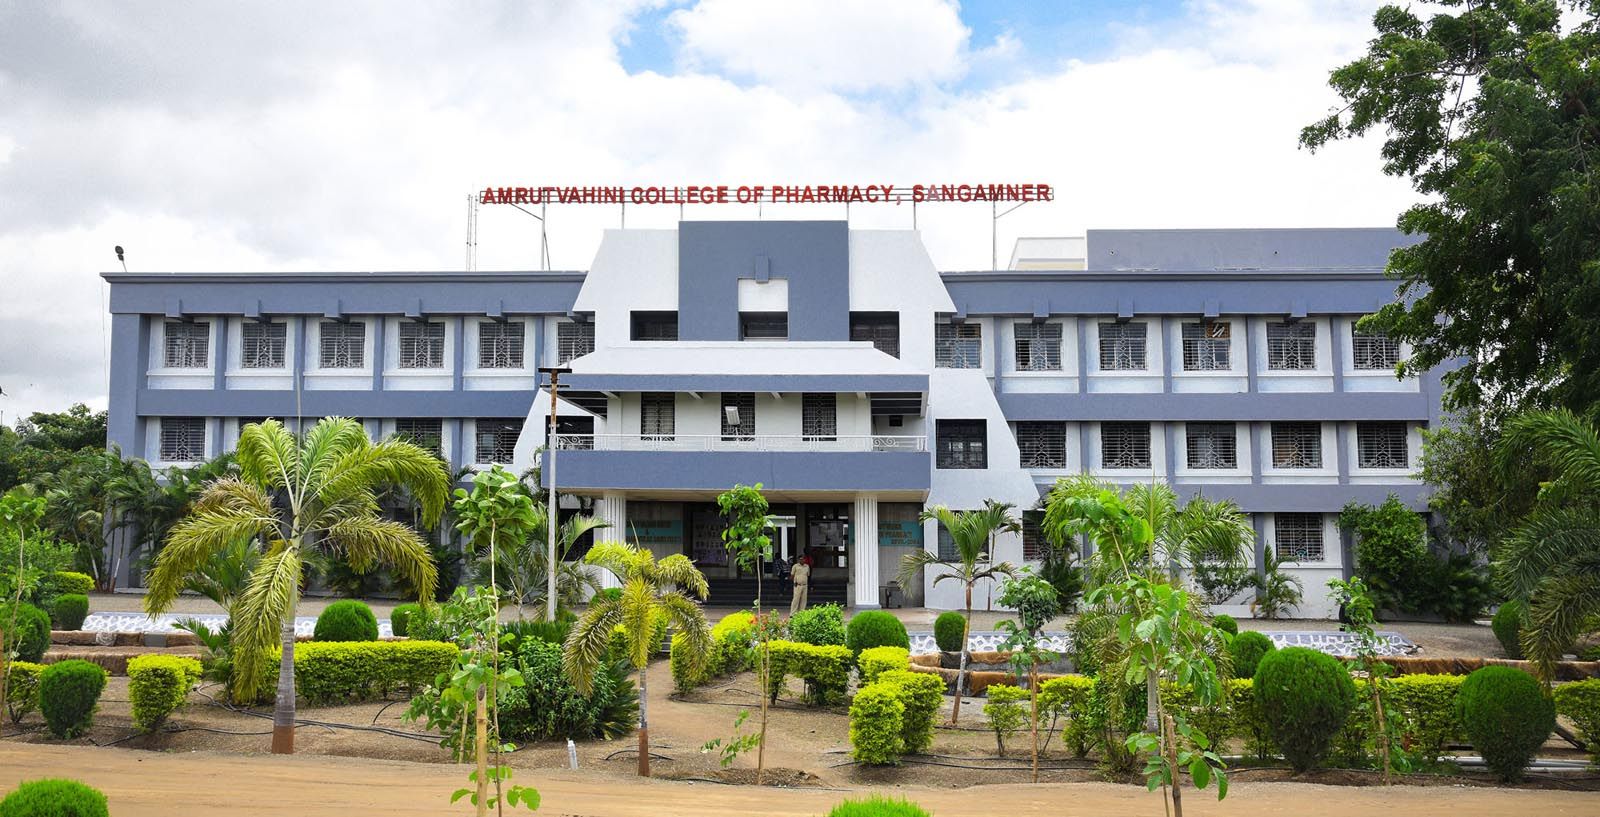 Amrutvahini College of Pharmacy Campus Building